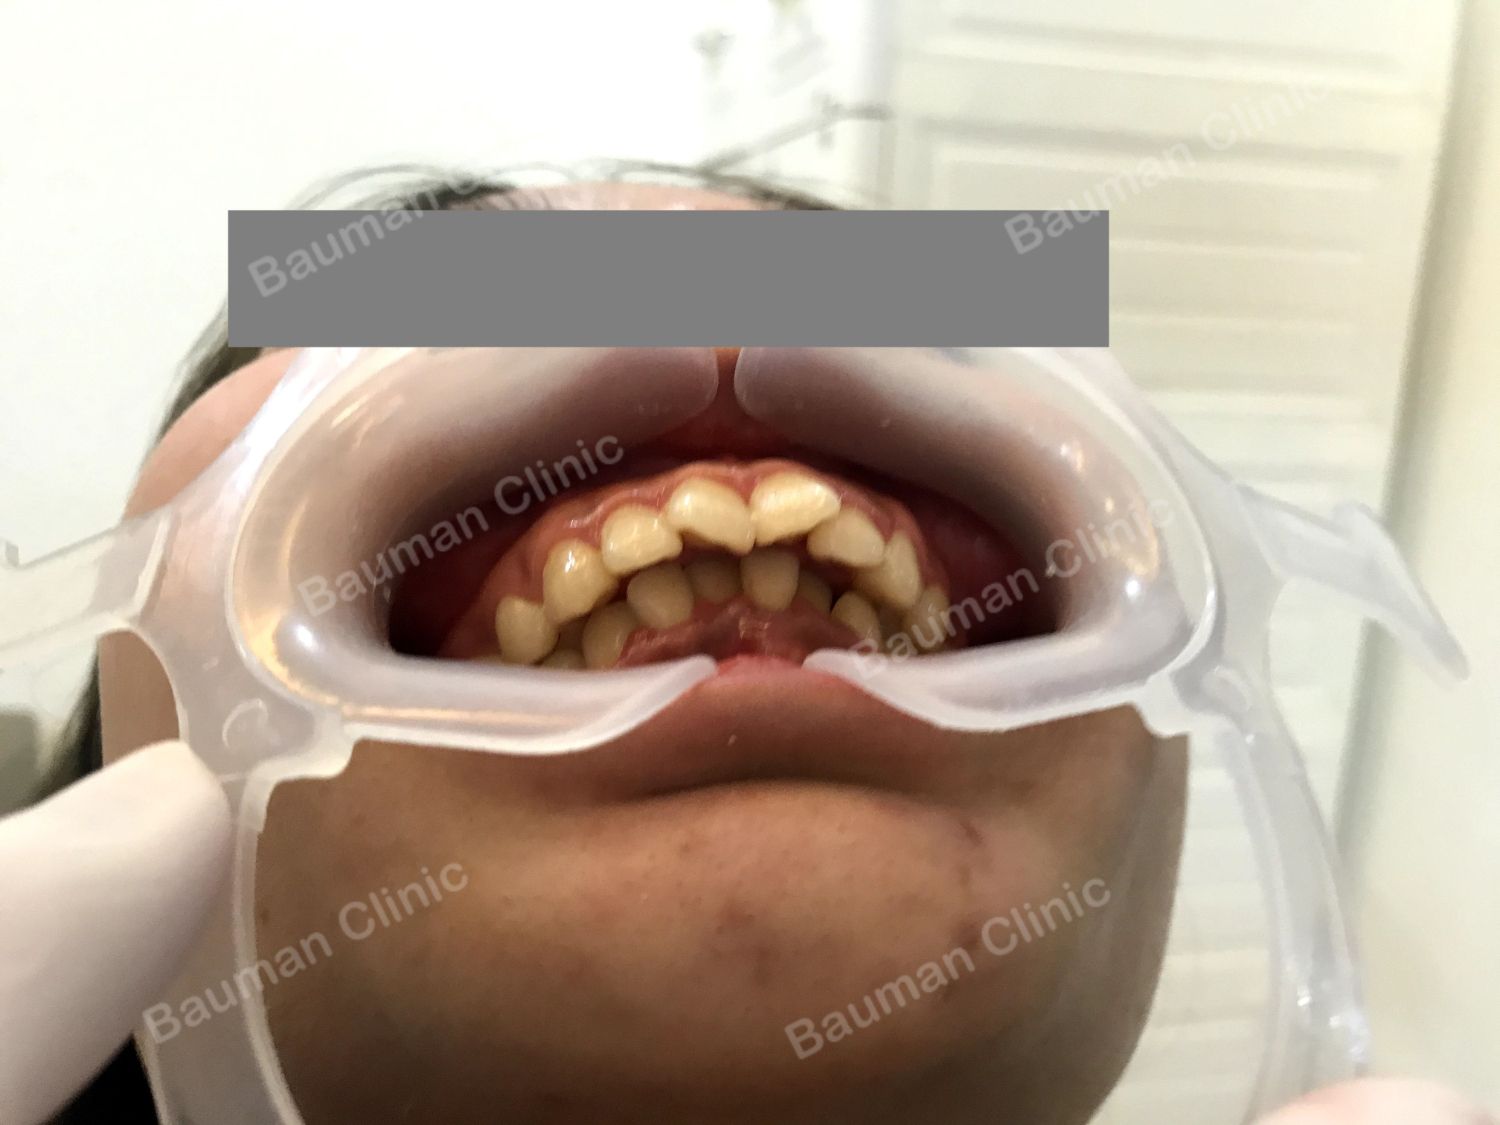 Ca niềng răng số 5011 - Nha khoa Bauman Clinic